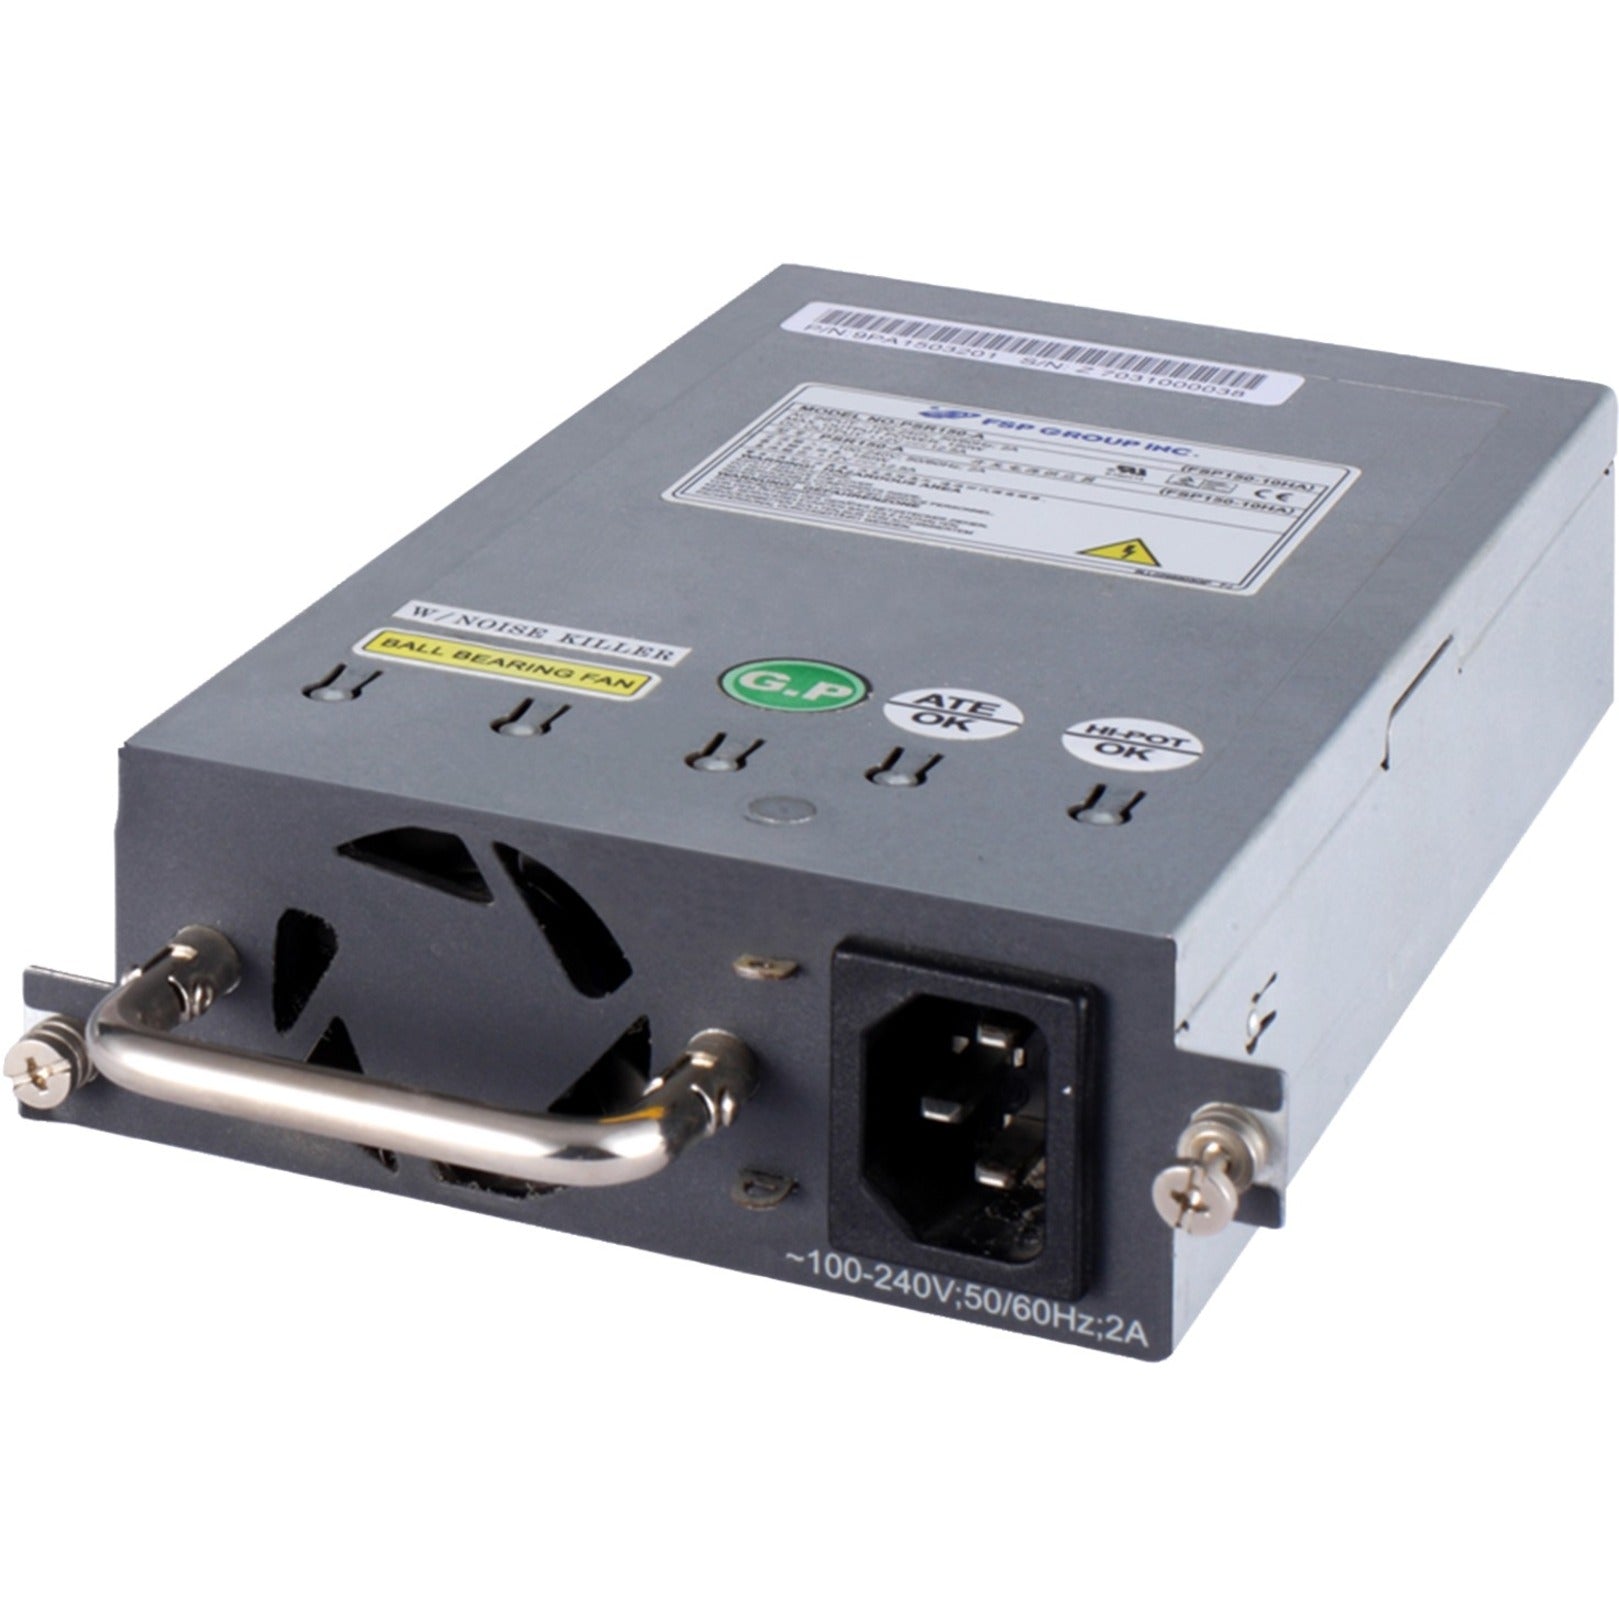 HPE E X361 150W AC Power Supply - 12 V DC Output (JD362B)